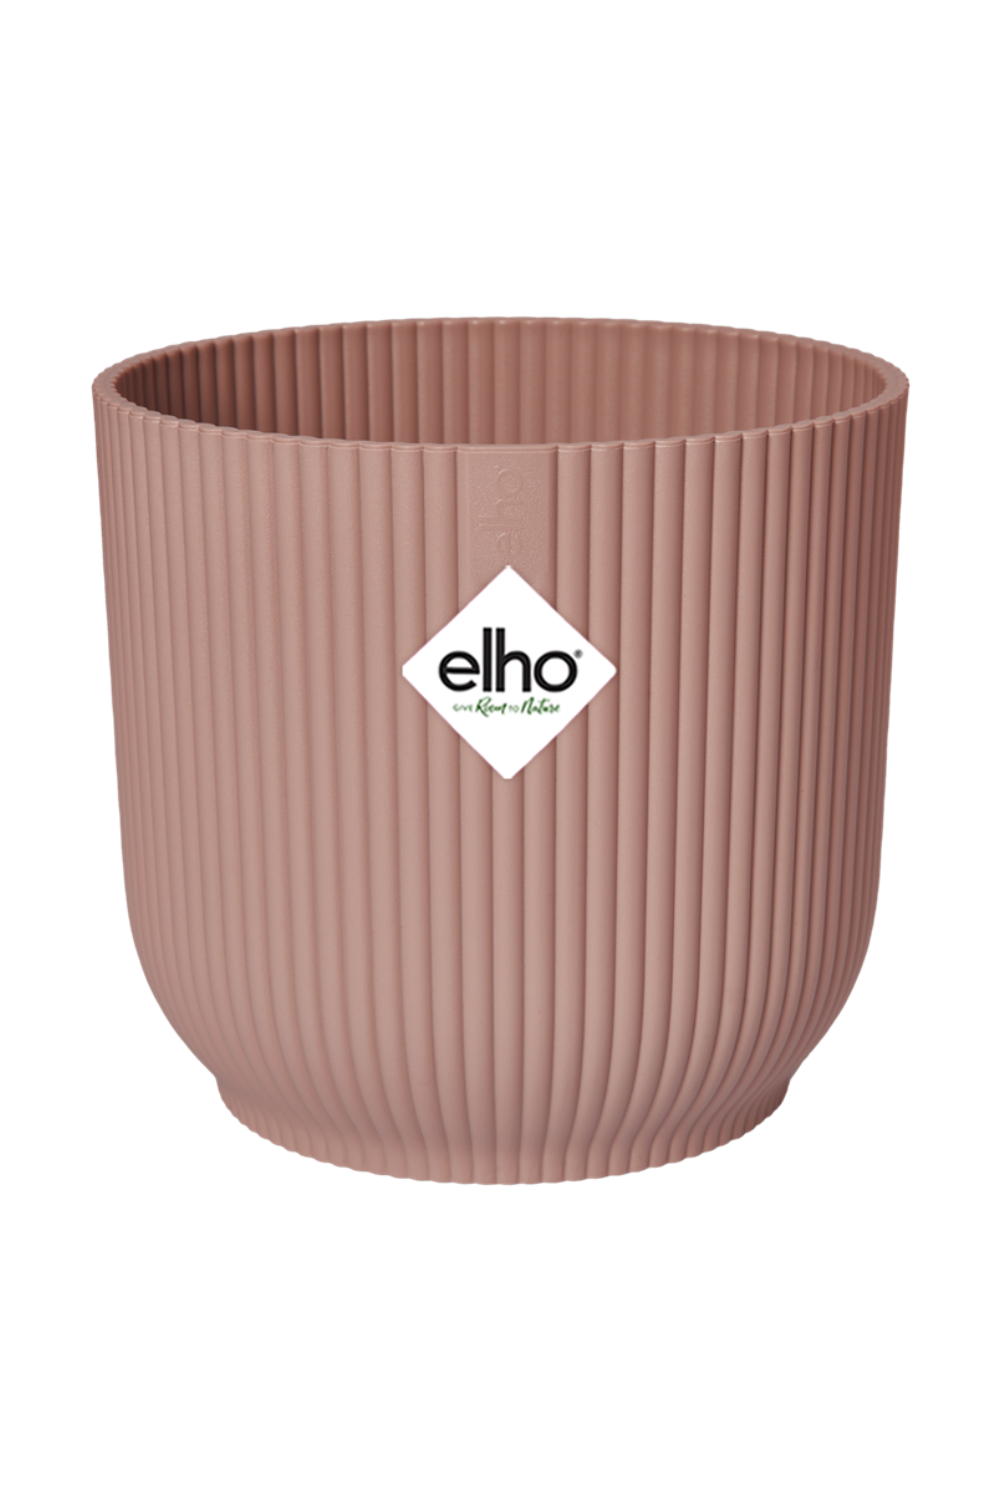 Blumentopf Elho Vibes Fold rund Delicate Pink 18cm